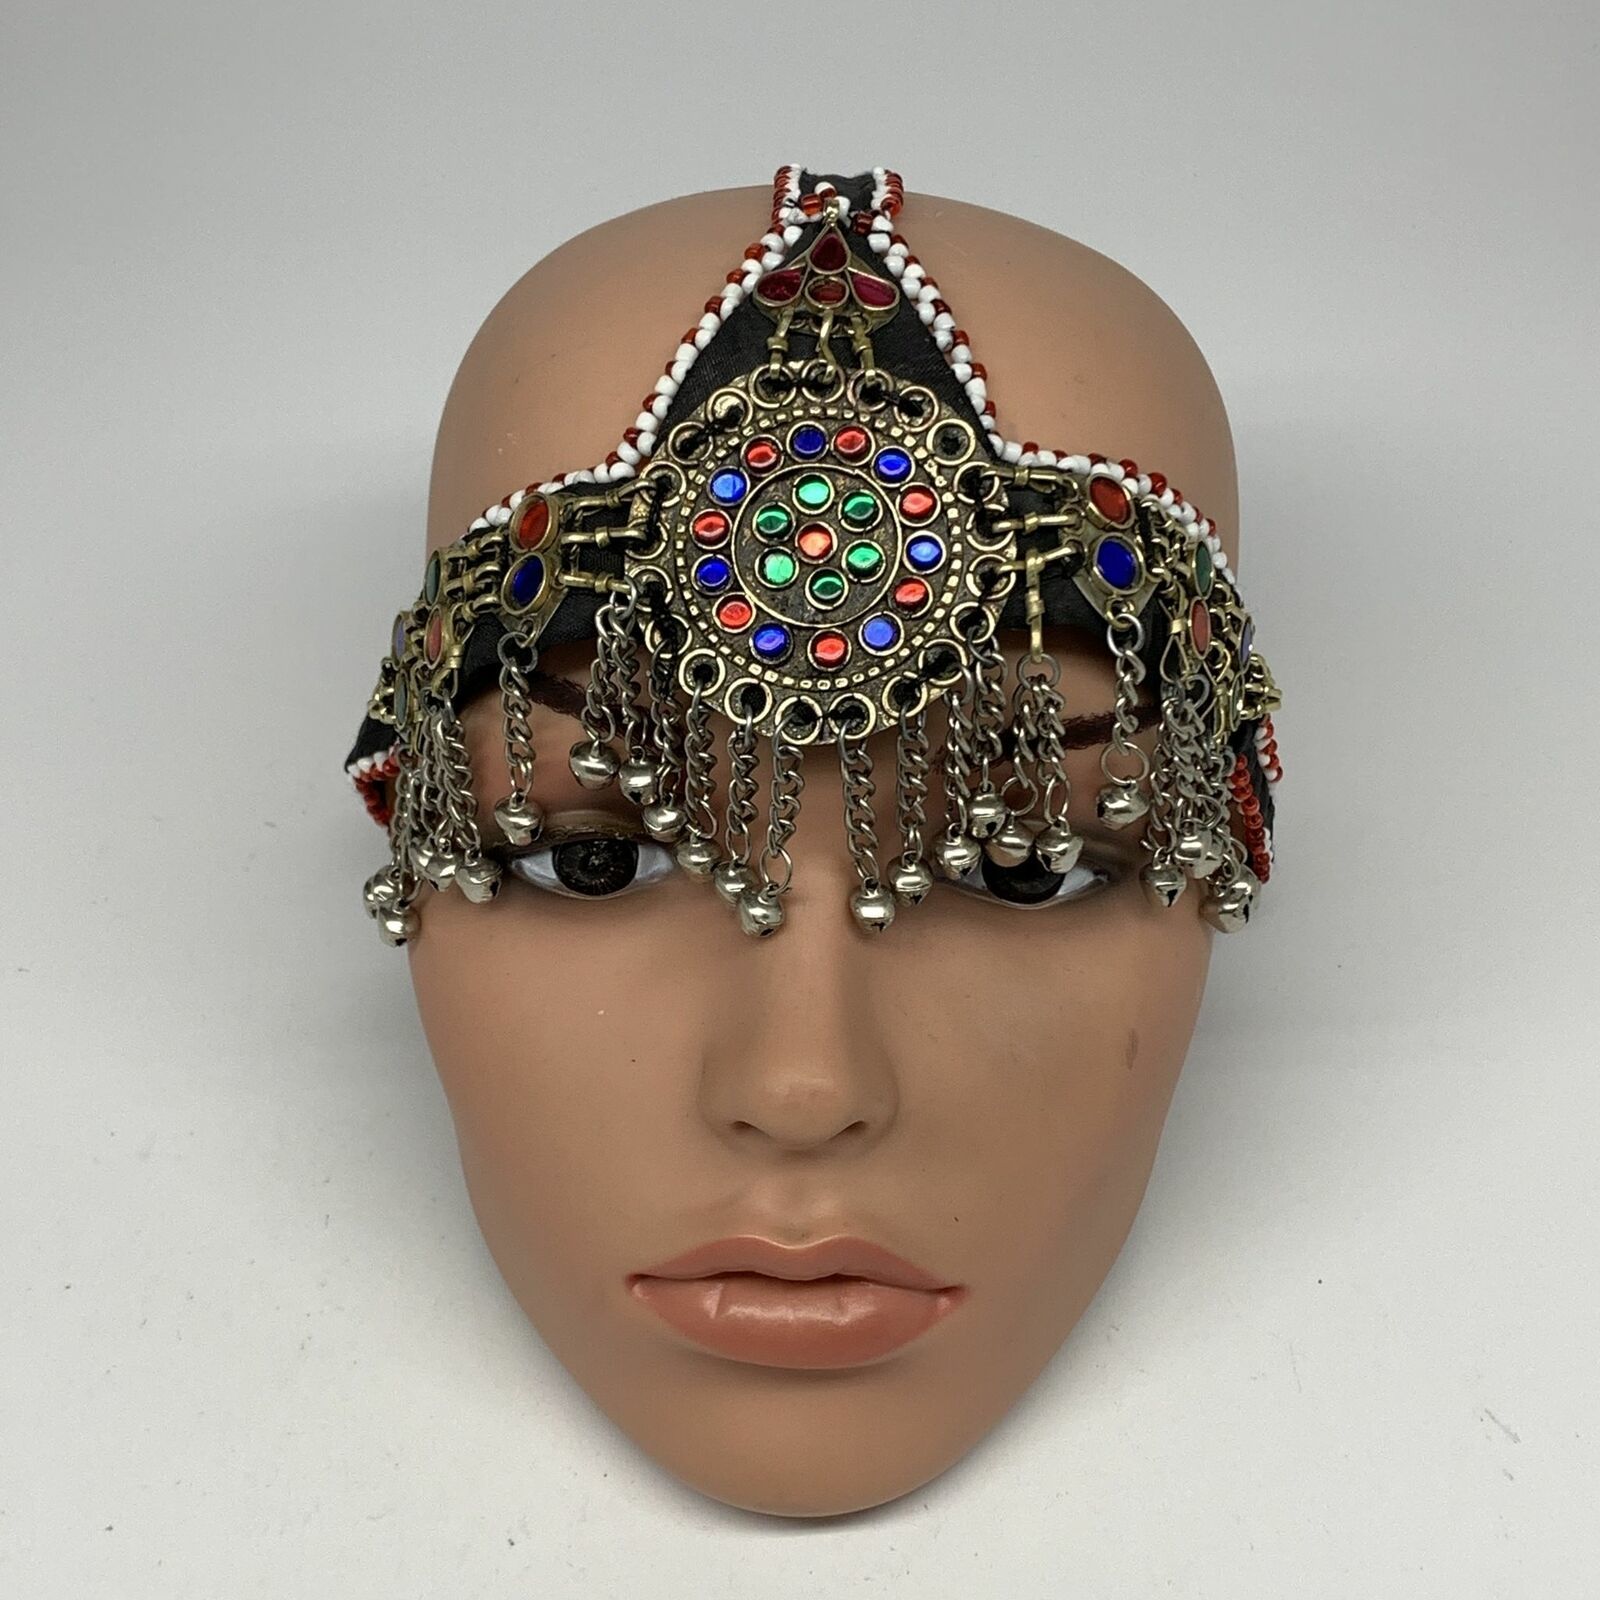 Primary image for 78.8g, Kuchi Headdress Headpiece Afghan Ethnic Tribal Jingle Bells @Afghanistan,